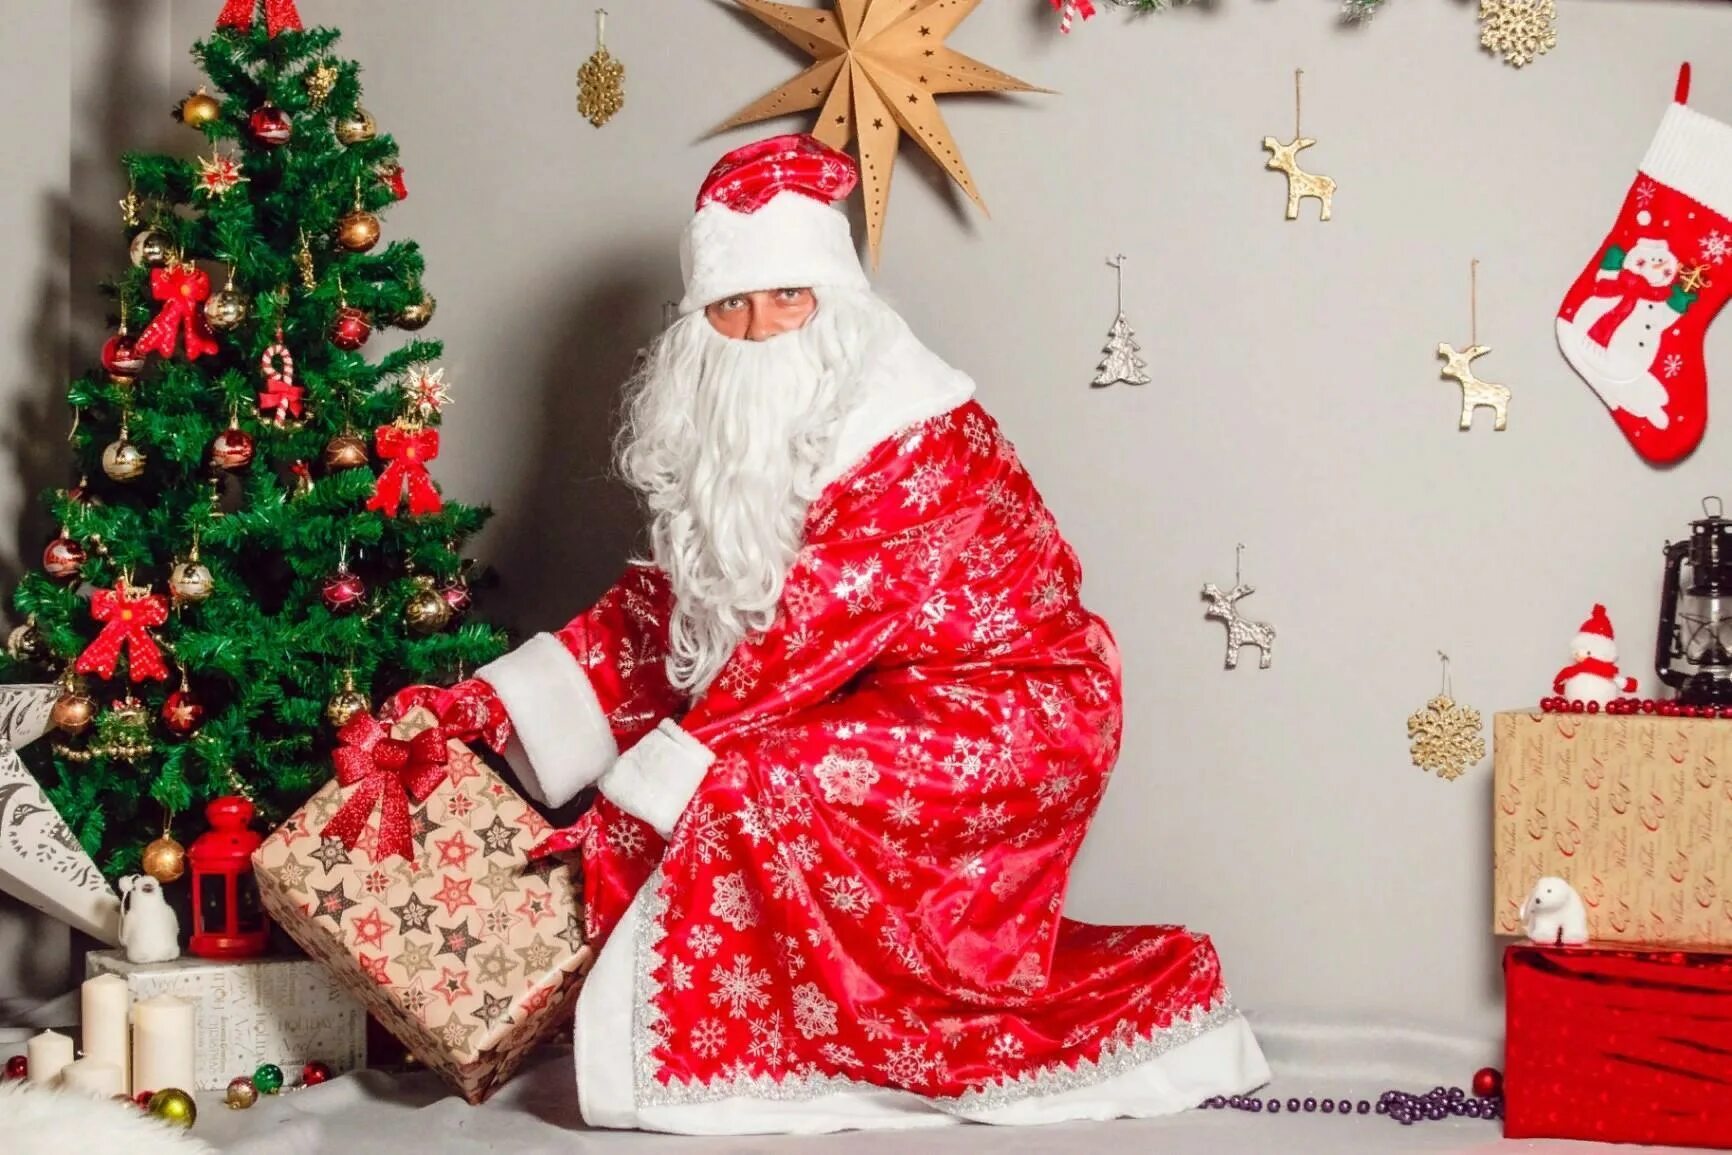 Дед мороз где брать мои подарки. Подарки Деда Мороза. Дед Мороз кладет подарки под елку. Дед Мороз и елка. Подарки от Деда Мороза под ёлкой.